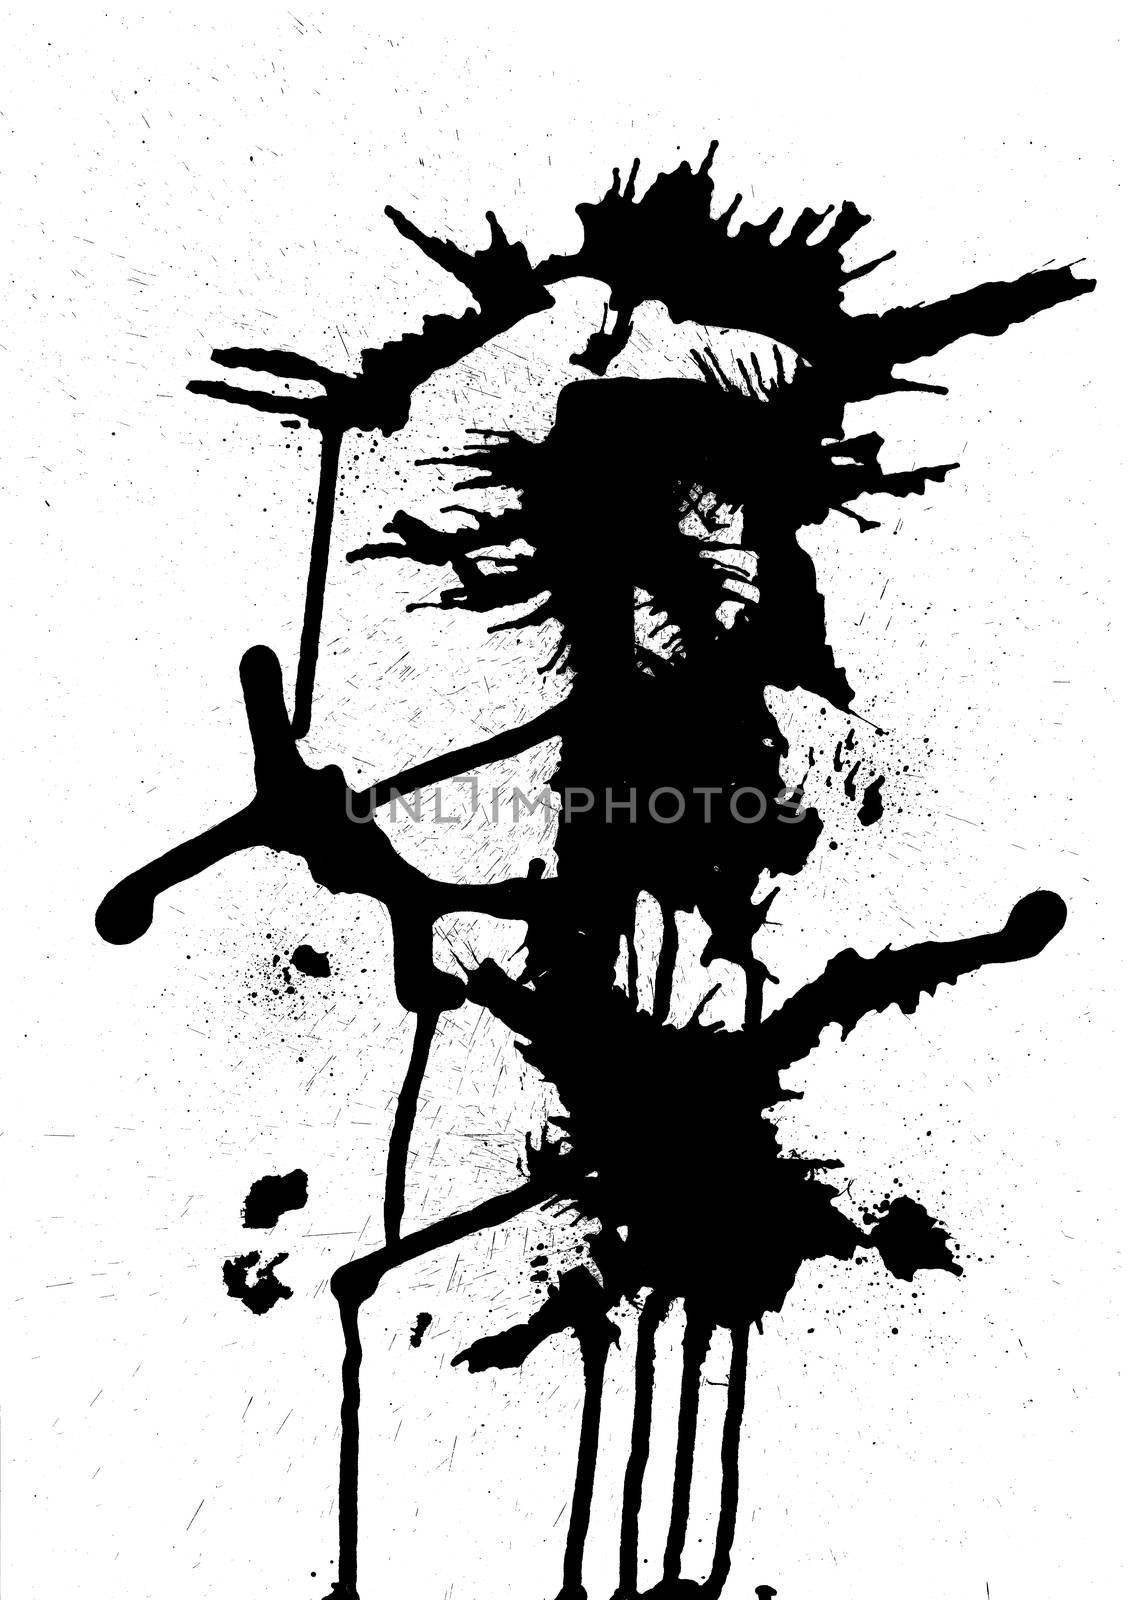 Black ink abstract design by Wavebreakmedia